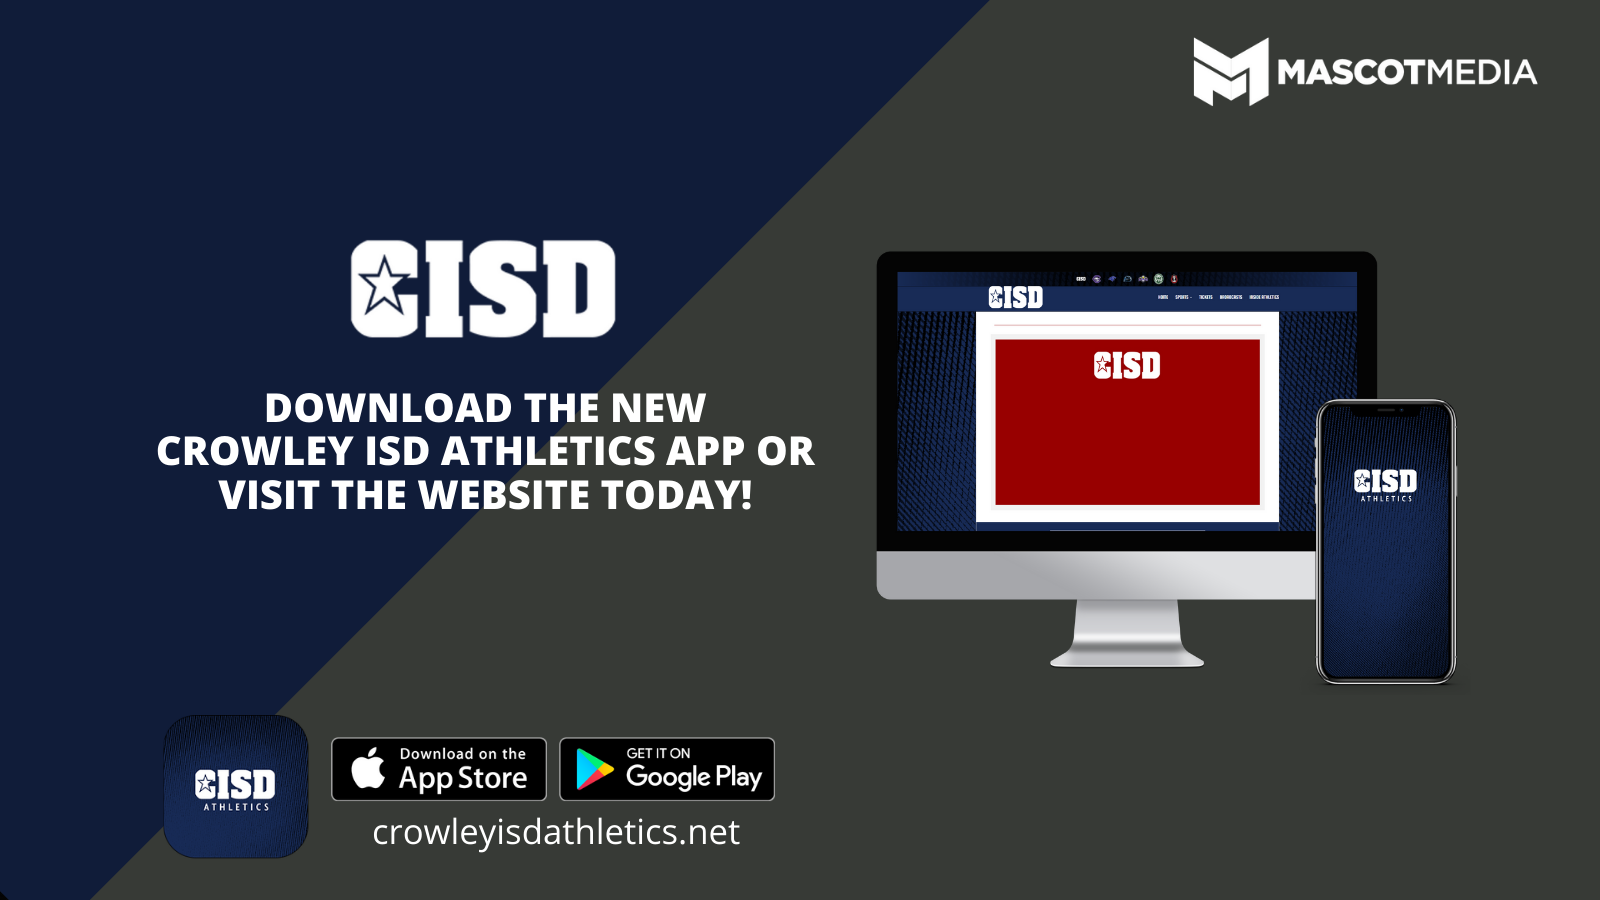 Crowley ISD Athletics App Social Graphic - Download the new Crowley ISD Athletics App or visit the website today!